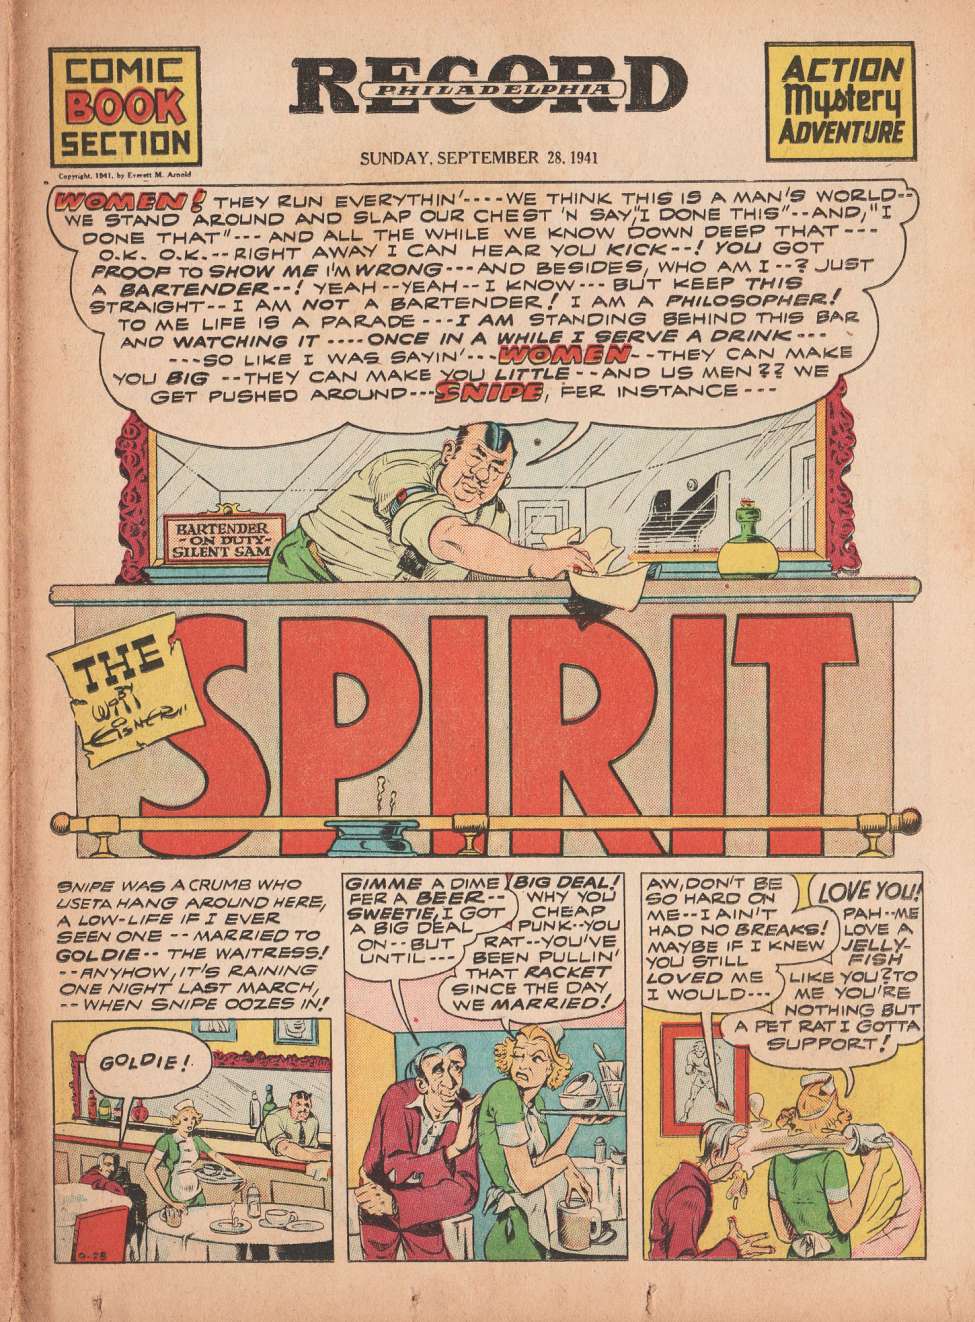 Comic Book Cover For The Spirit (1941-09-28) - Philadelphia Record - Version 1